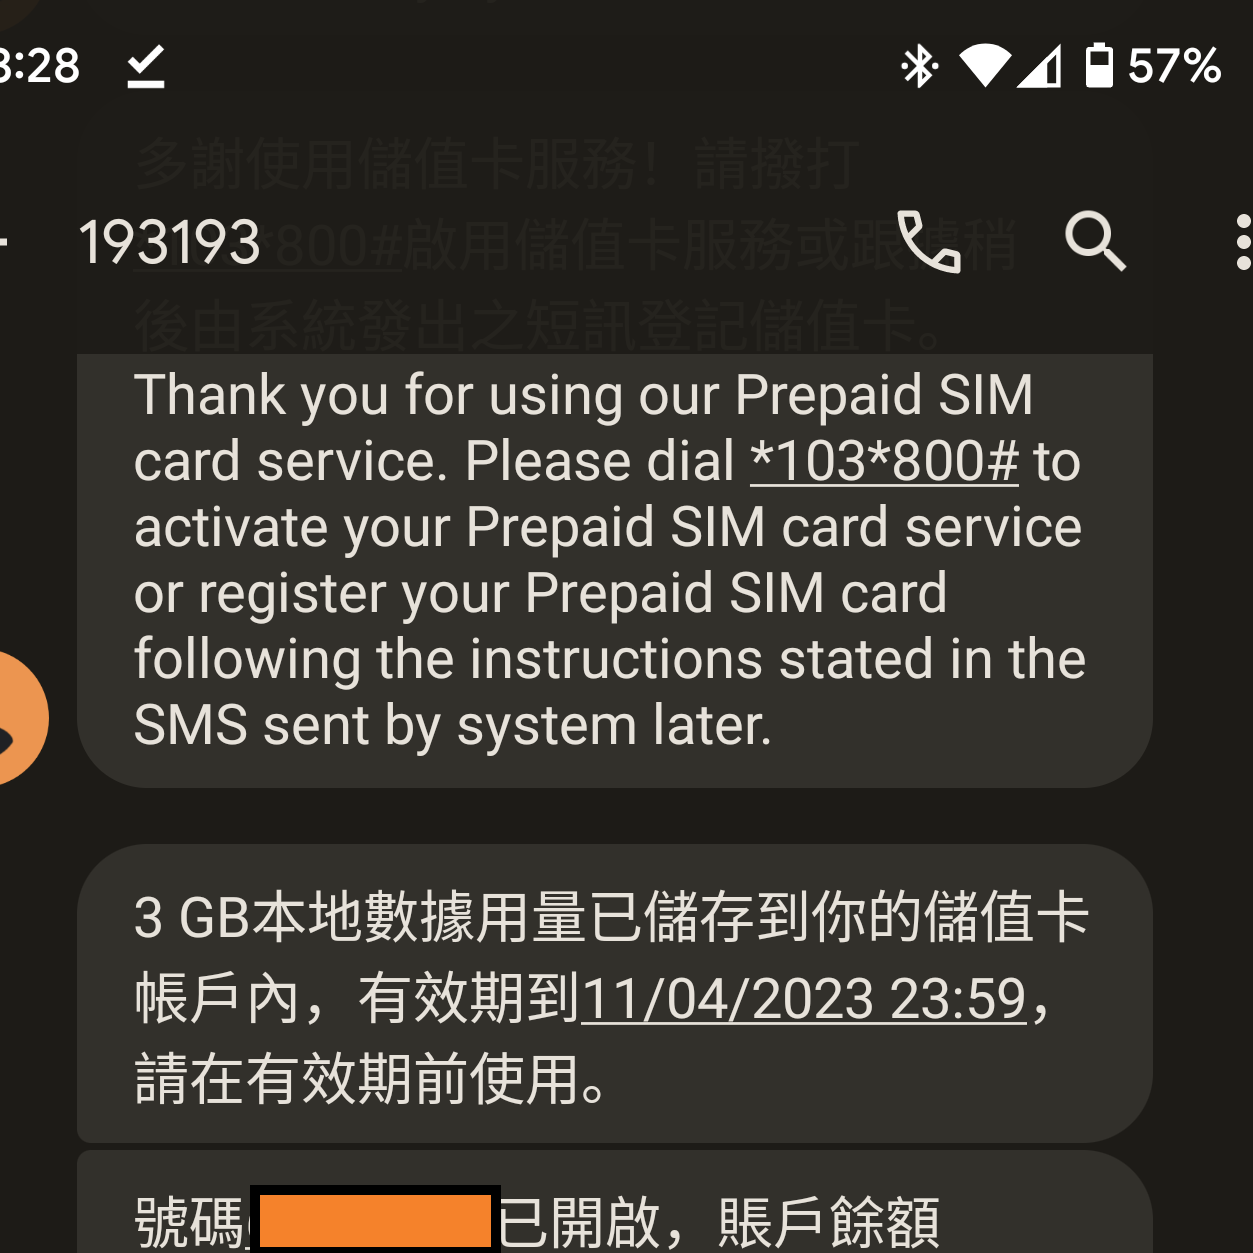 China Mobile Hong Kong SIM Card Registration Text Message